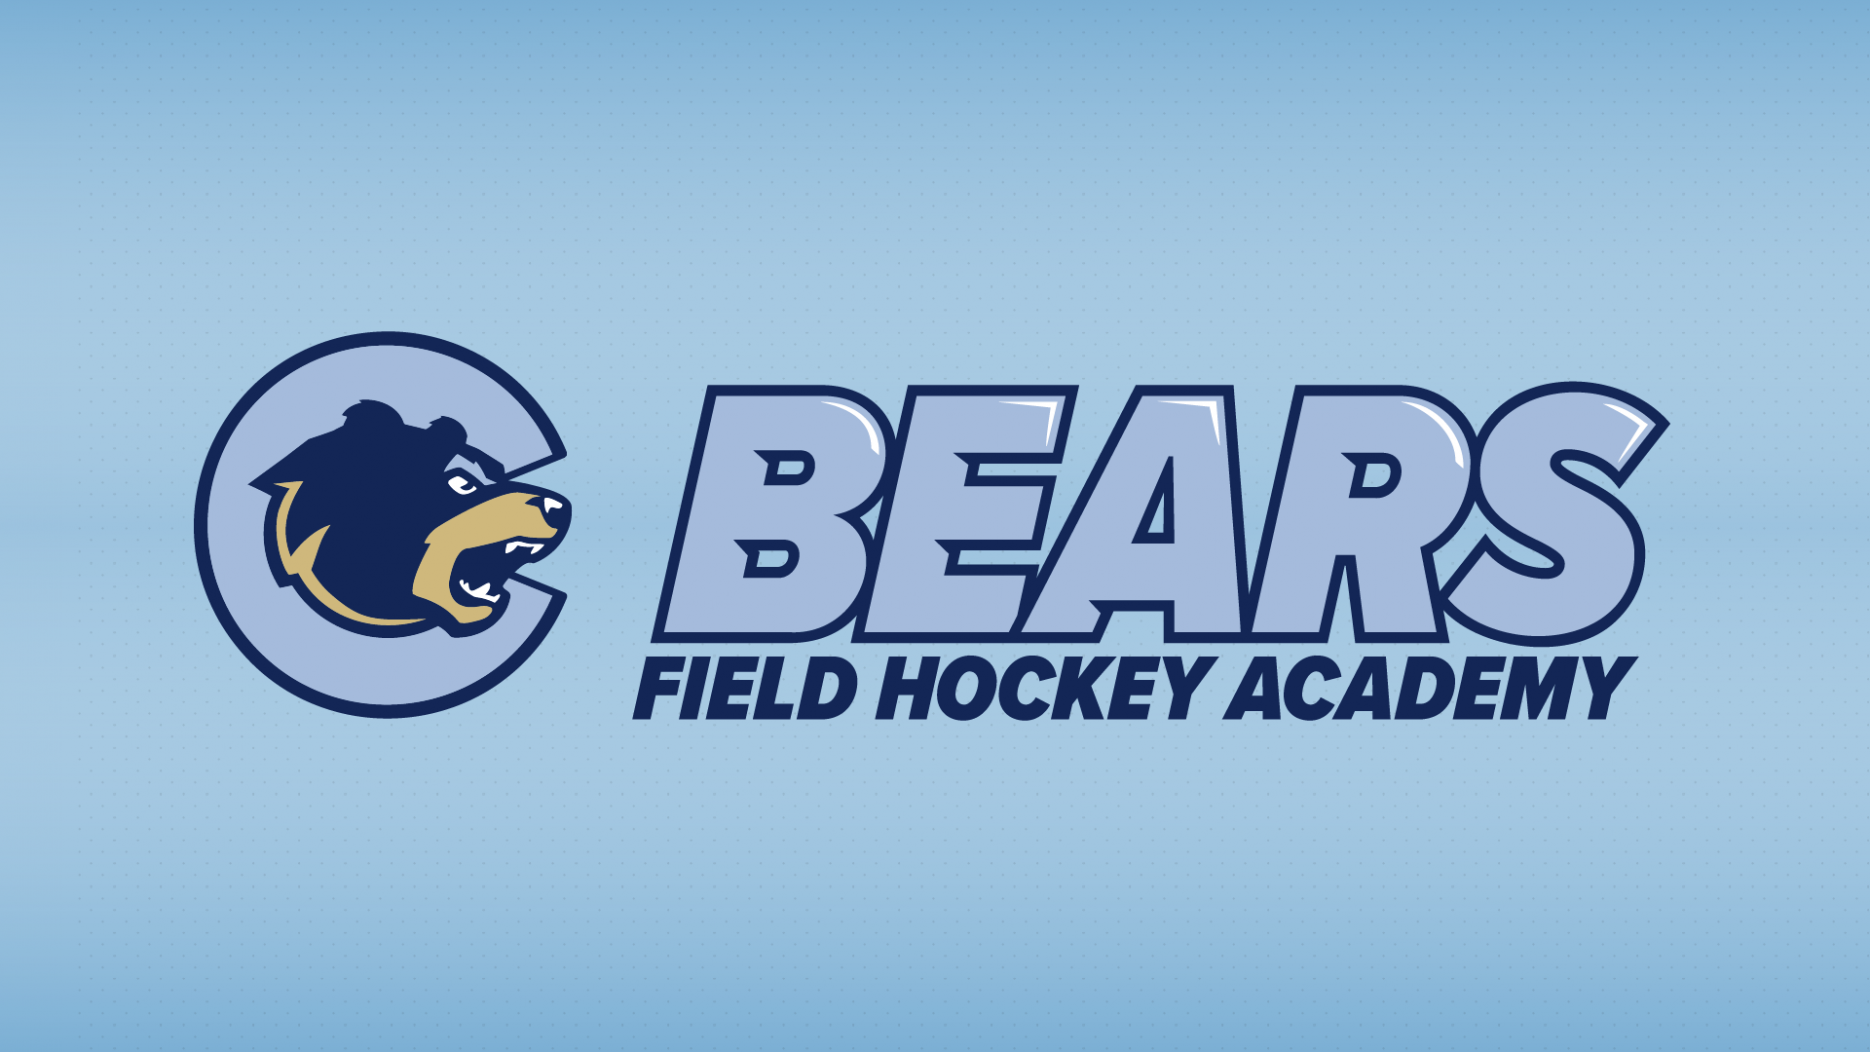 Colorado Bears Field Hockey Academy